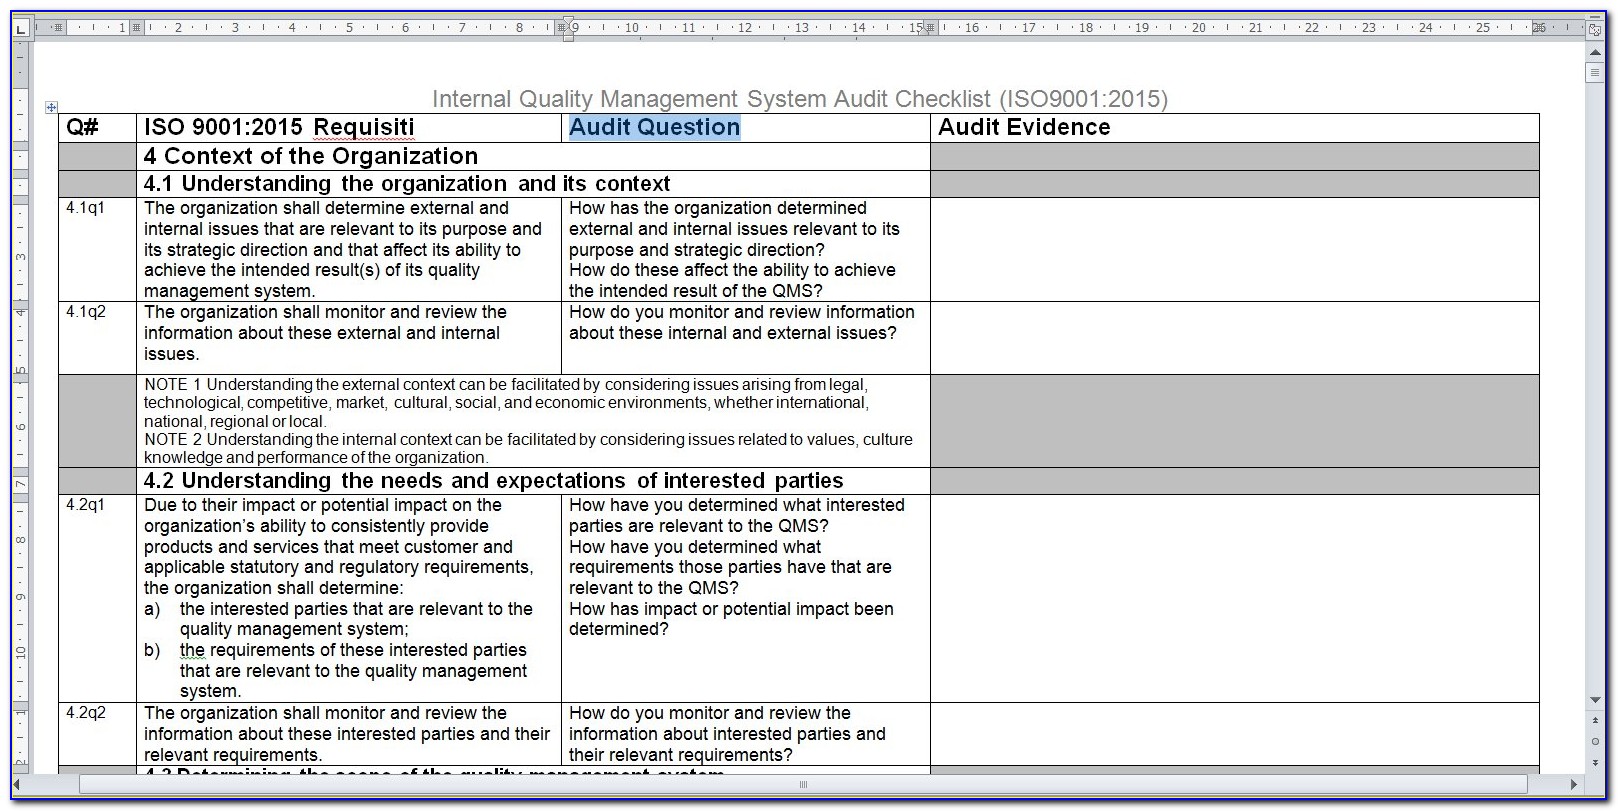 Internal Audit Checklist Template Iso 17025